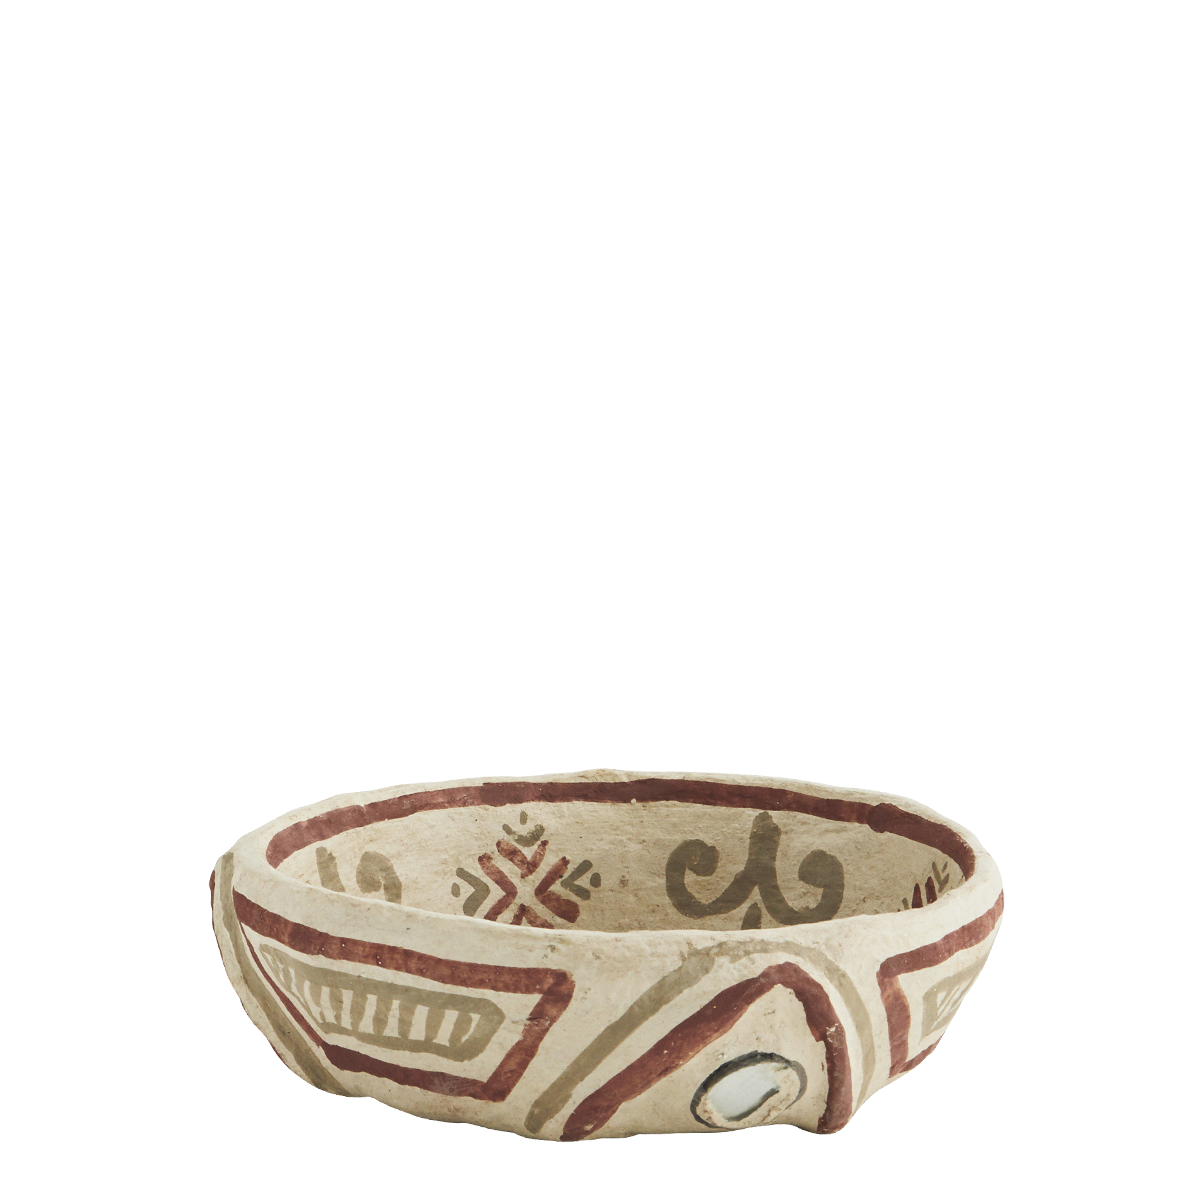 Handpainted paper mache bowl